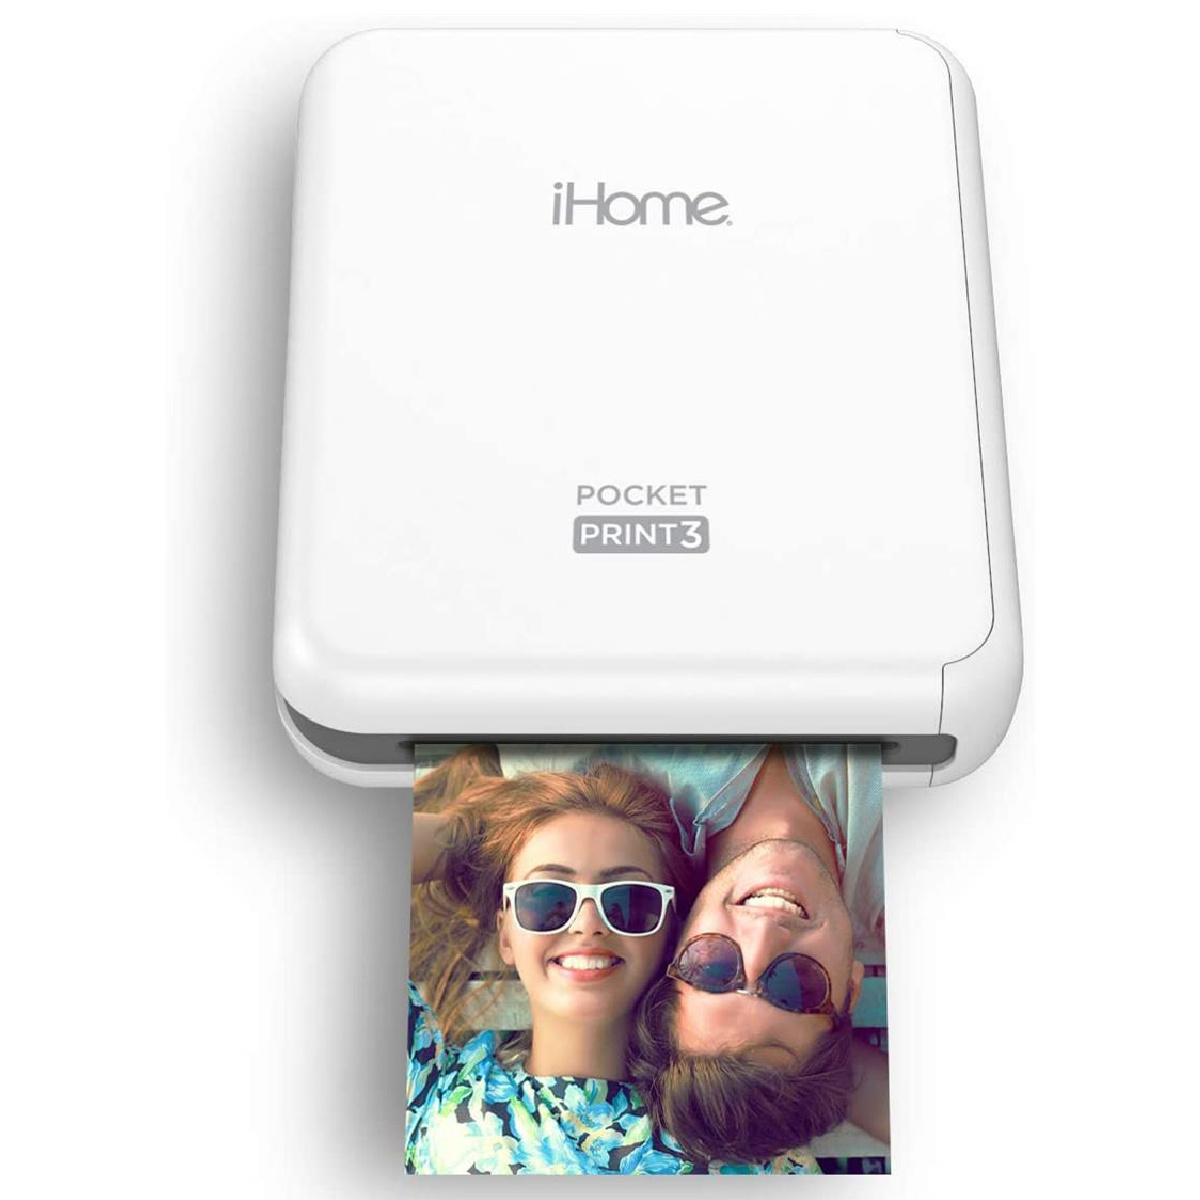 iHome PocketPrint3 Smartphone Photo Printer